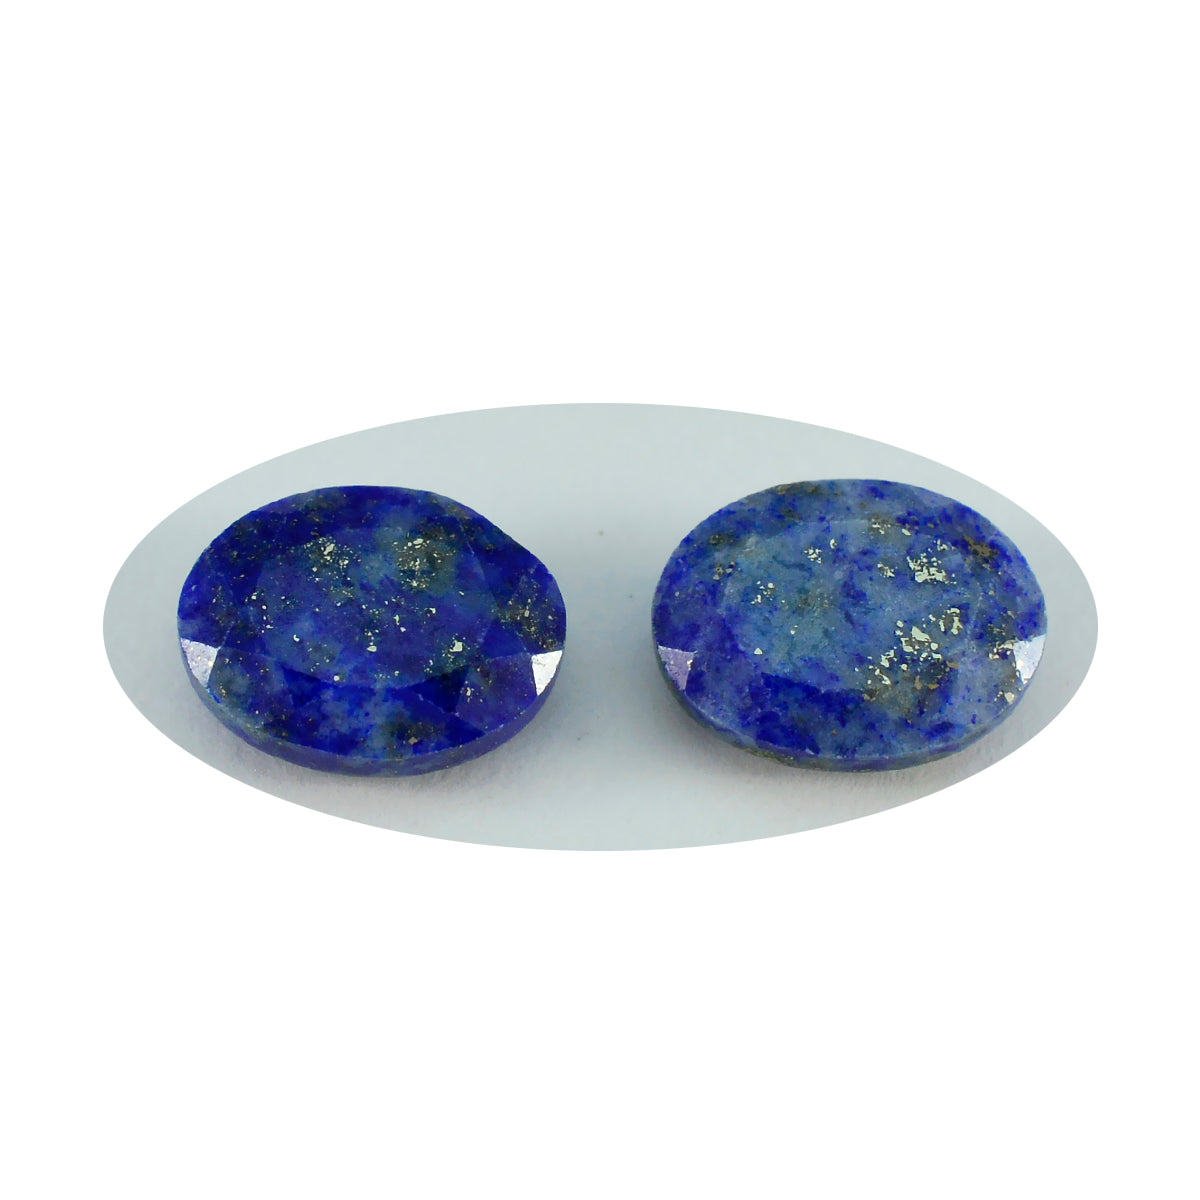 Riyogems 1 Stück echter blauer Lapislazuli, facettiert, 7 x 9 mm, ovale Form, schöner Qualitäts-Edelstein